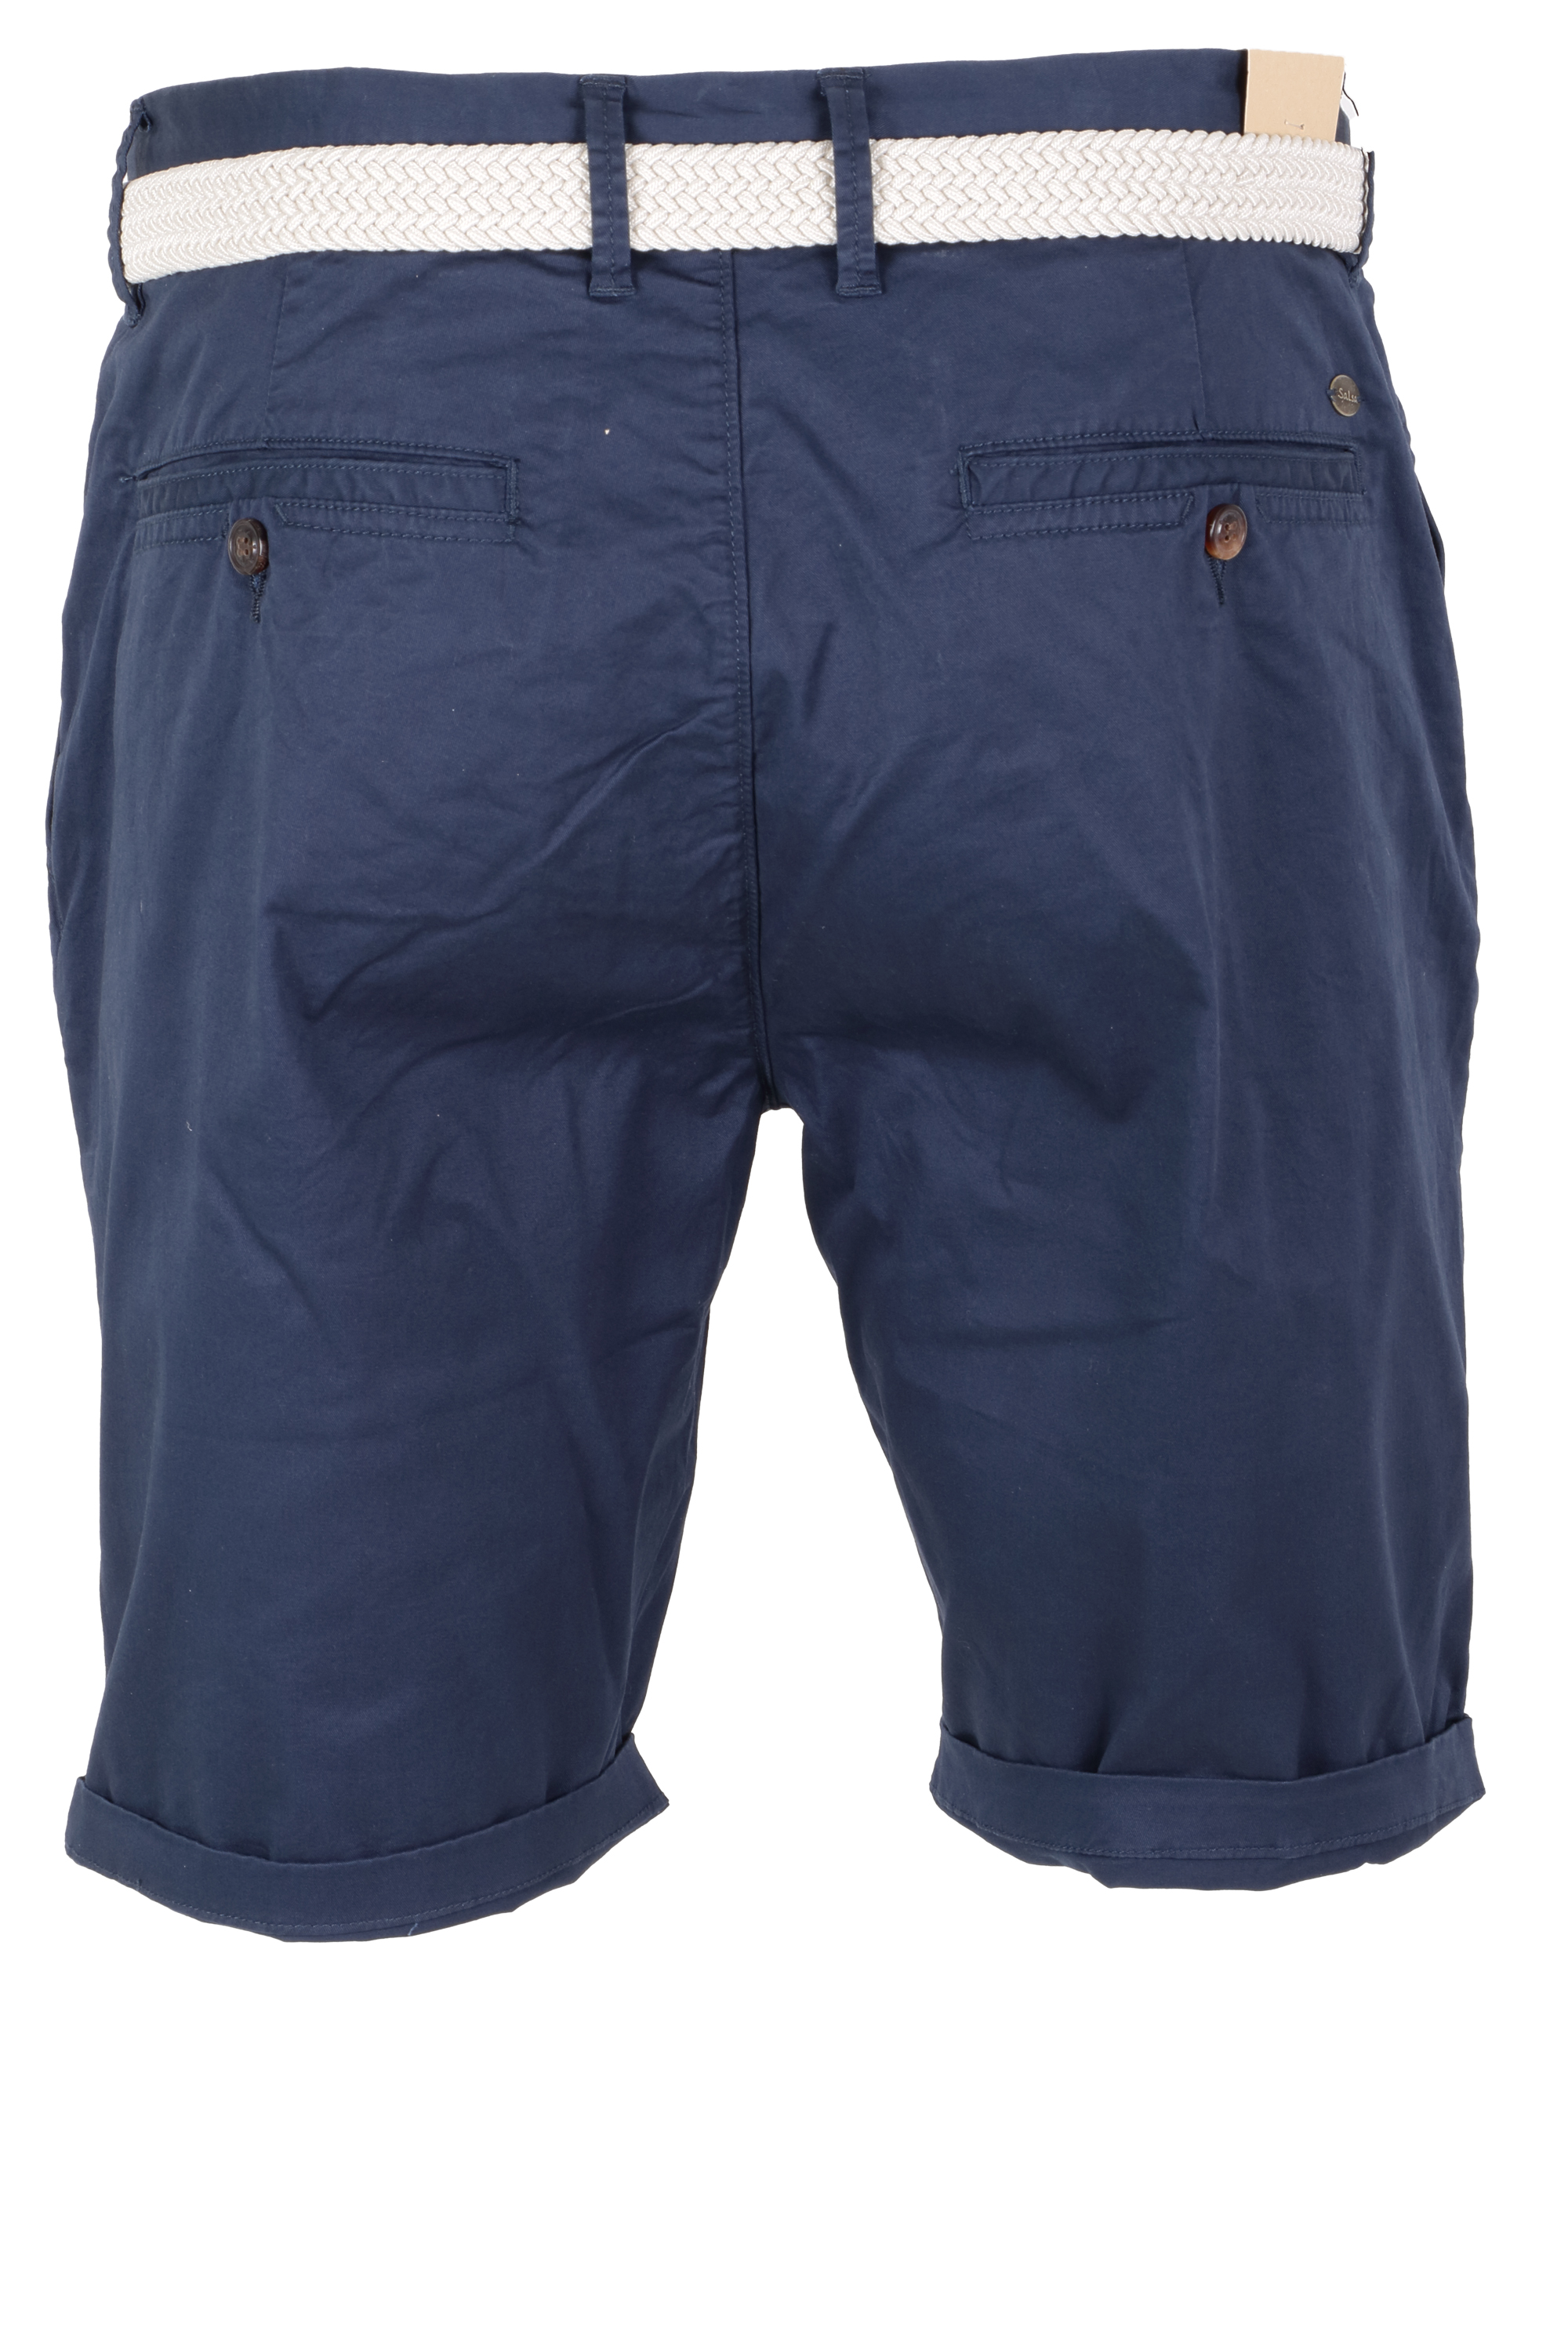 Sala Herren Bermuda Shorts mit Gürtel - dunkelblau 34